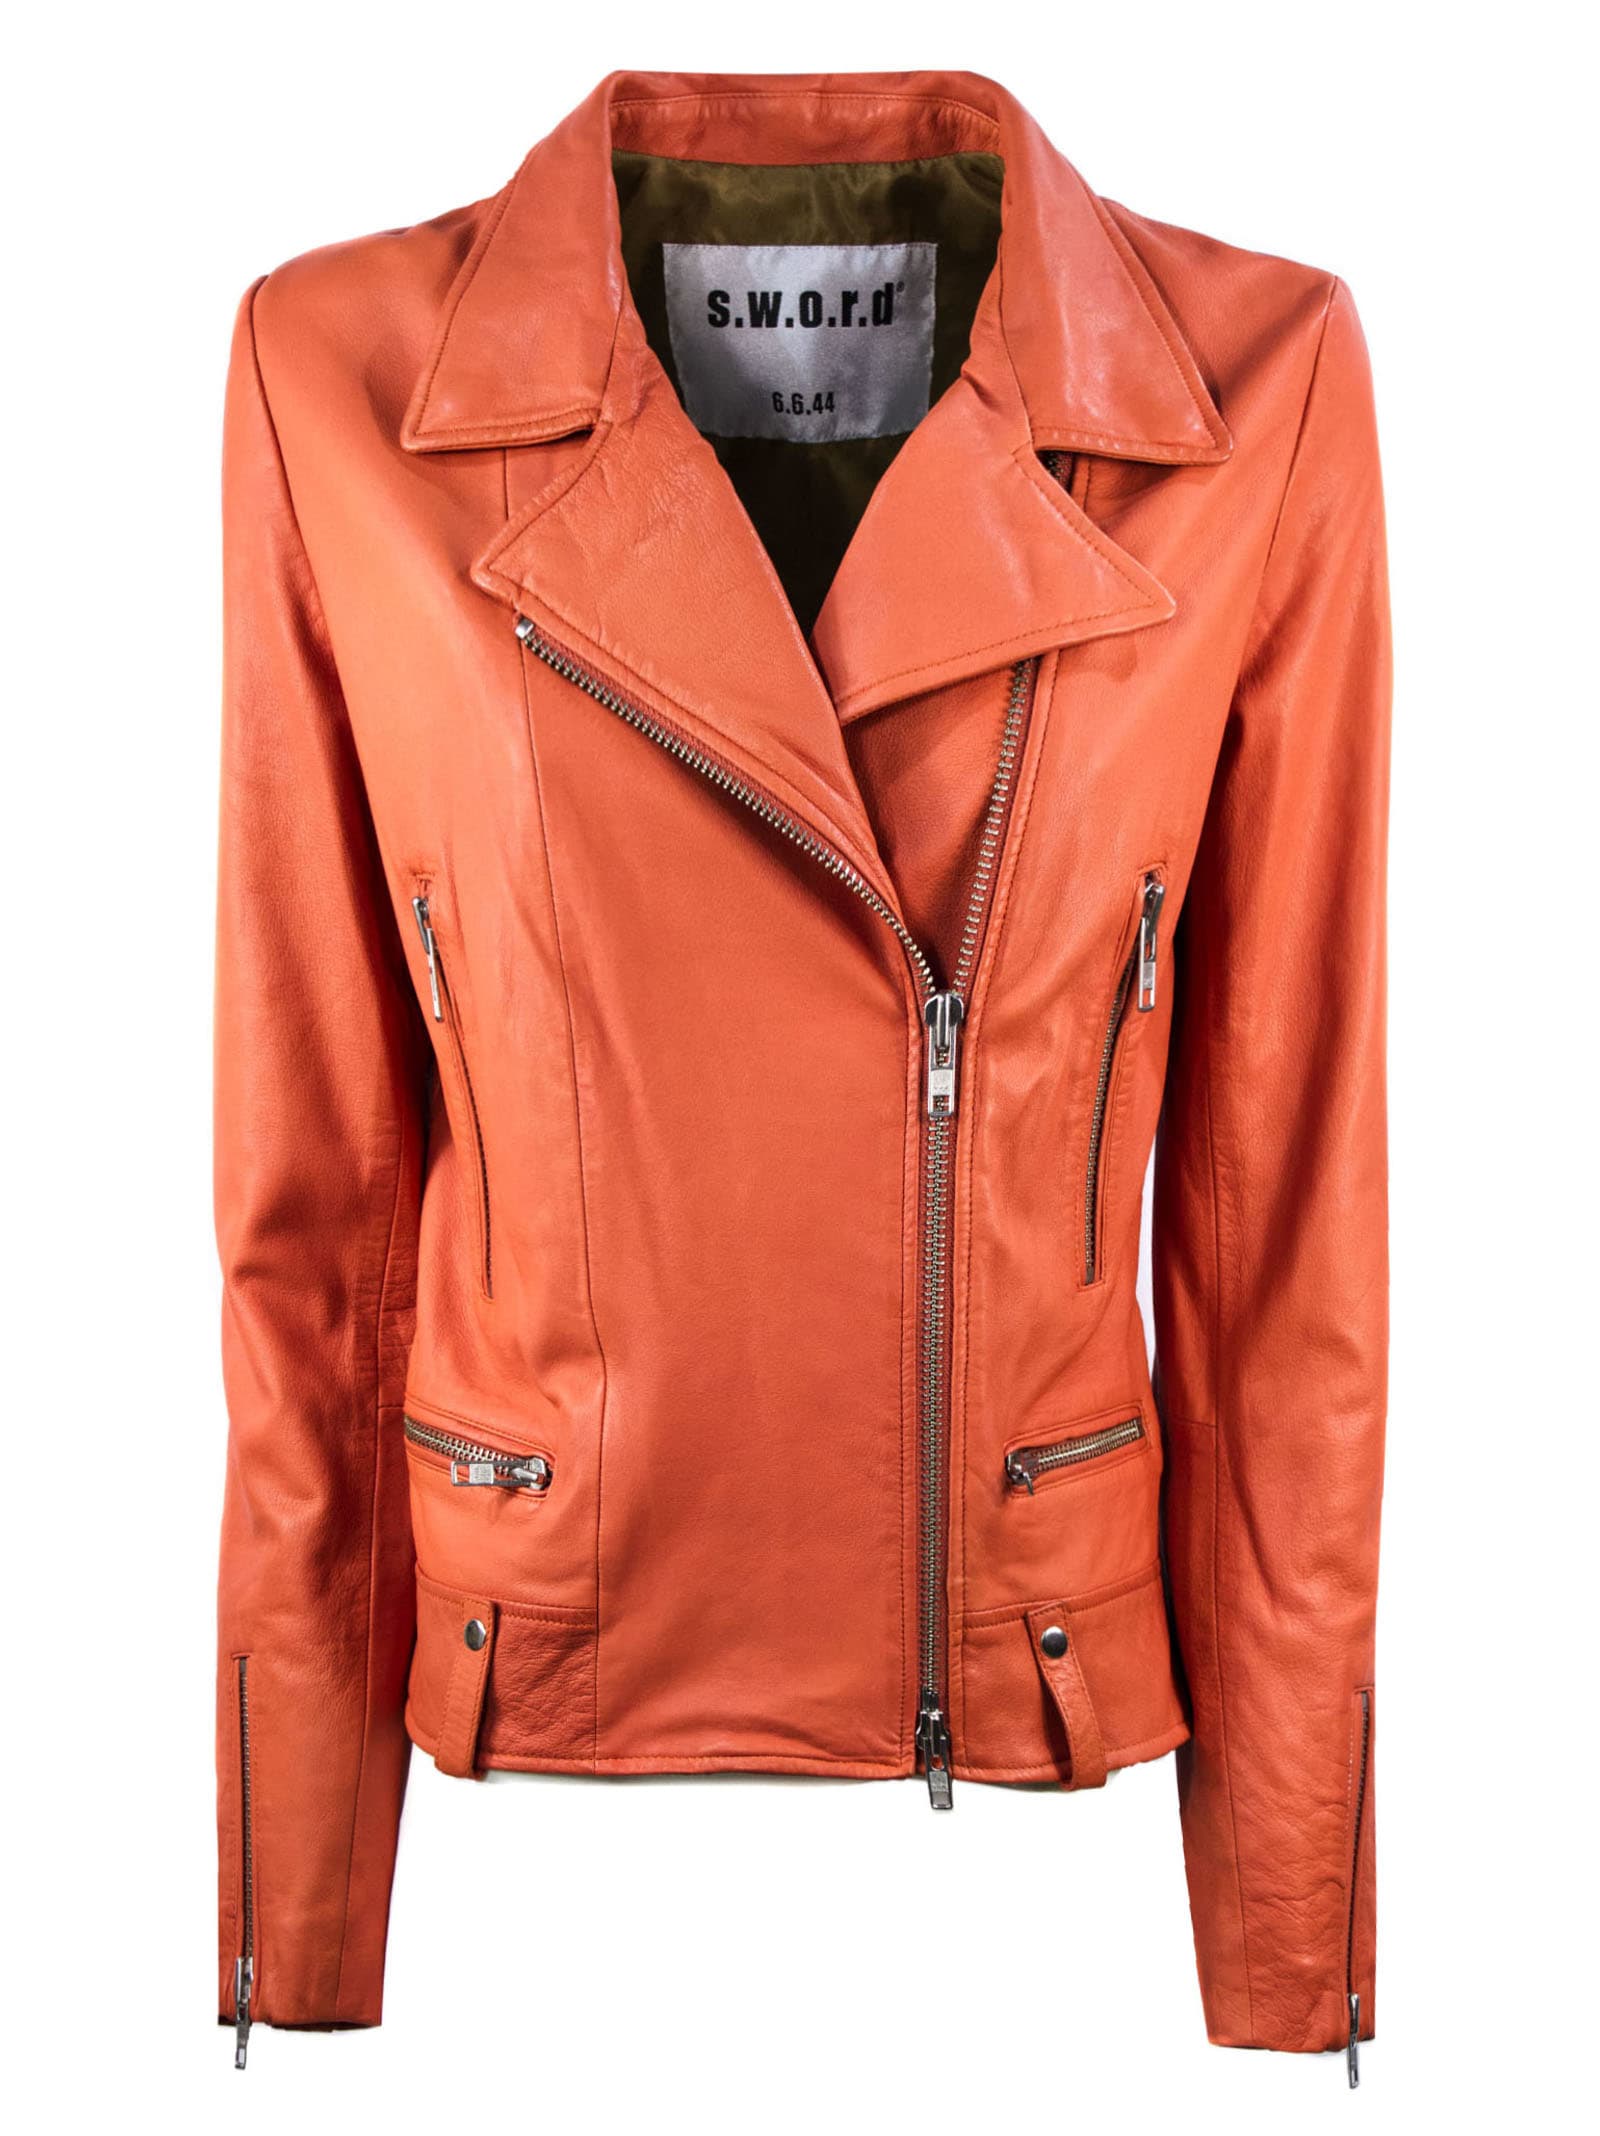 S.W.O.R.D 6.6.44 Orange Biker Jacket